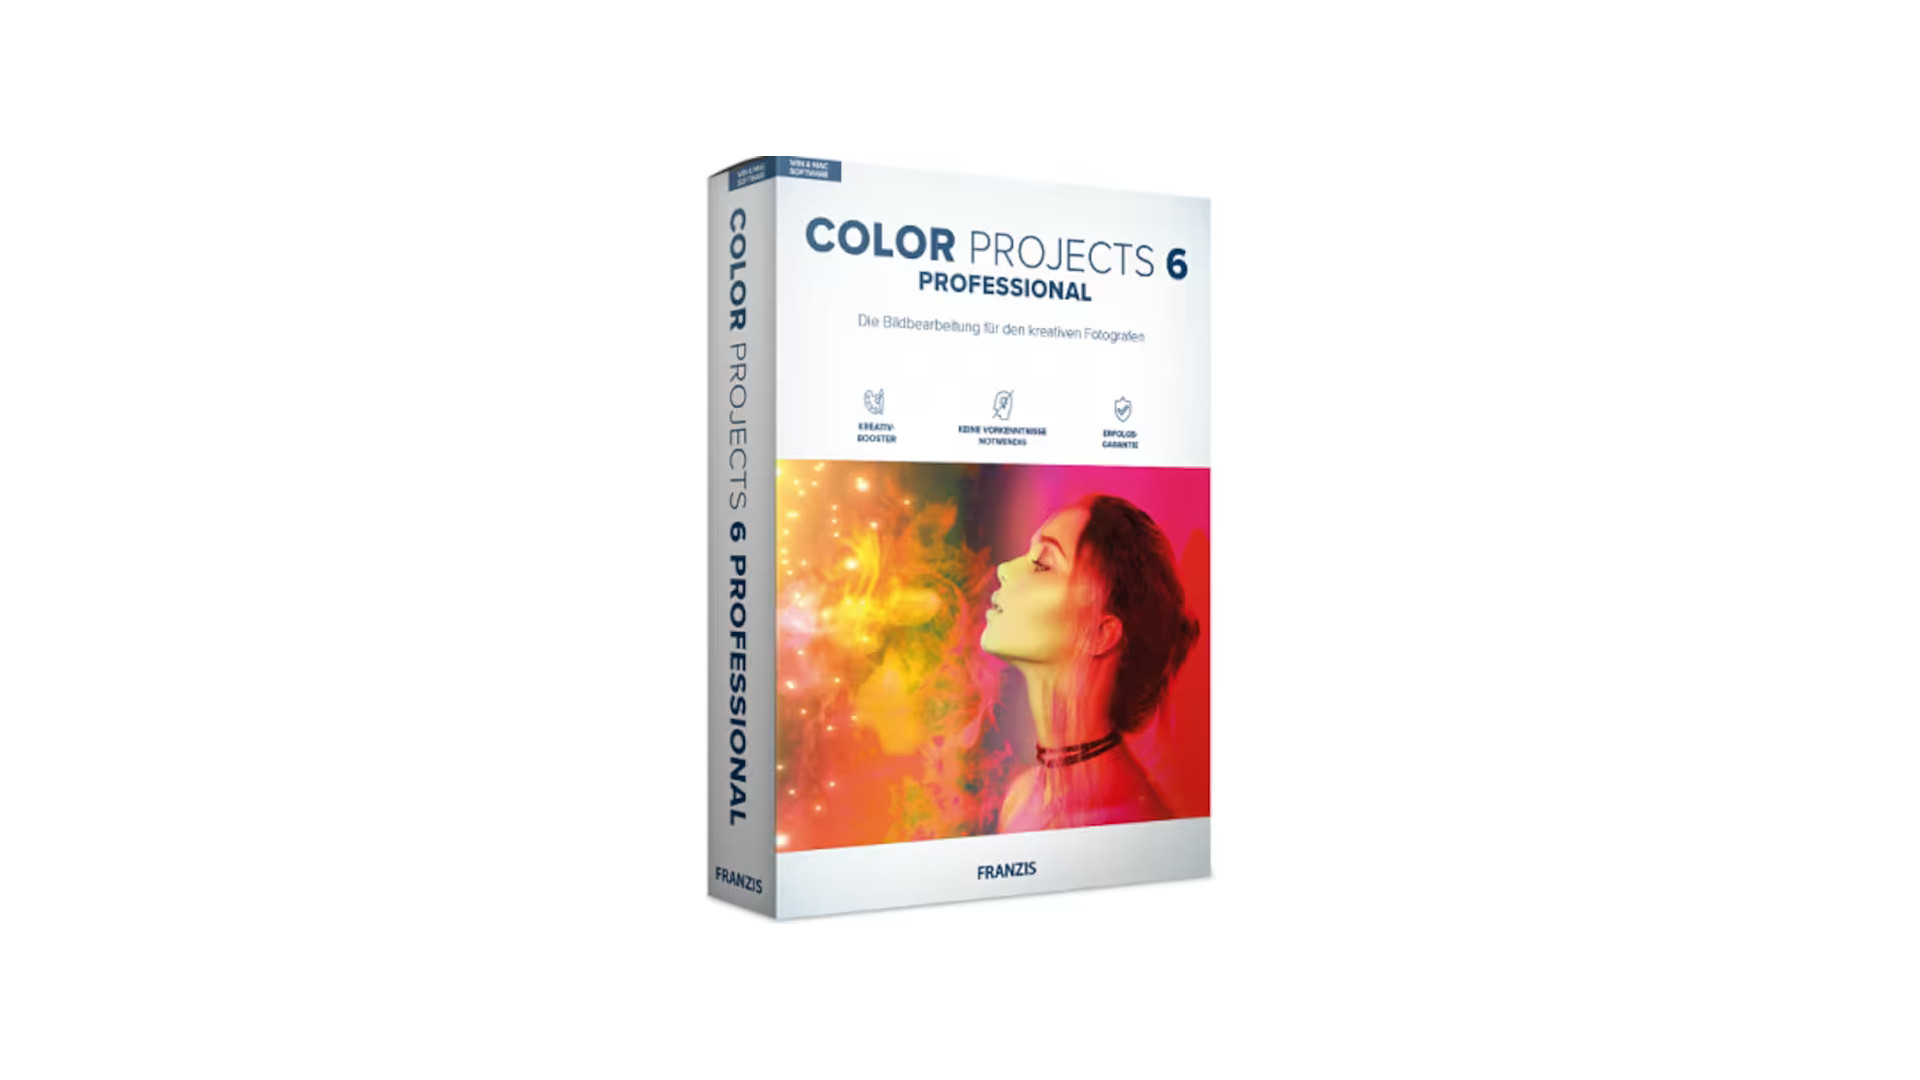 COLOR projects 6 Pro - Project Software Key (Lifetime / 1 PC), 33.89 usd